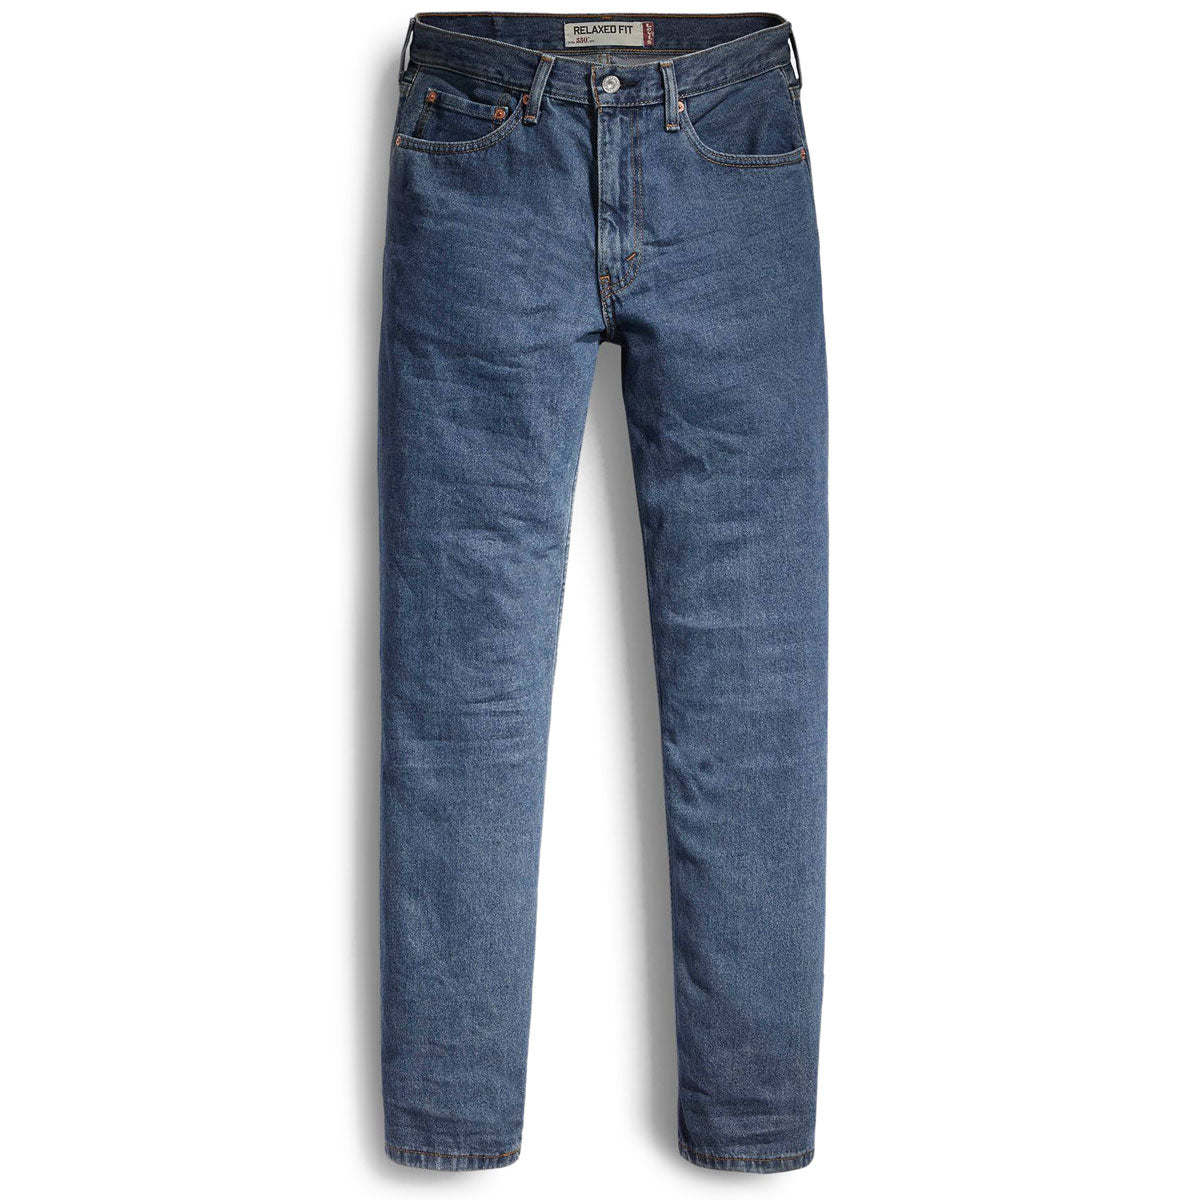 Levi's 550 Relaxed Jeans - Dark Stonewash image 4